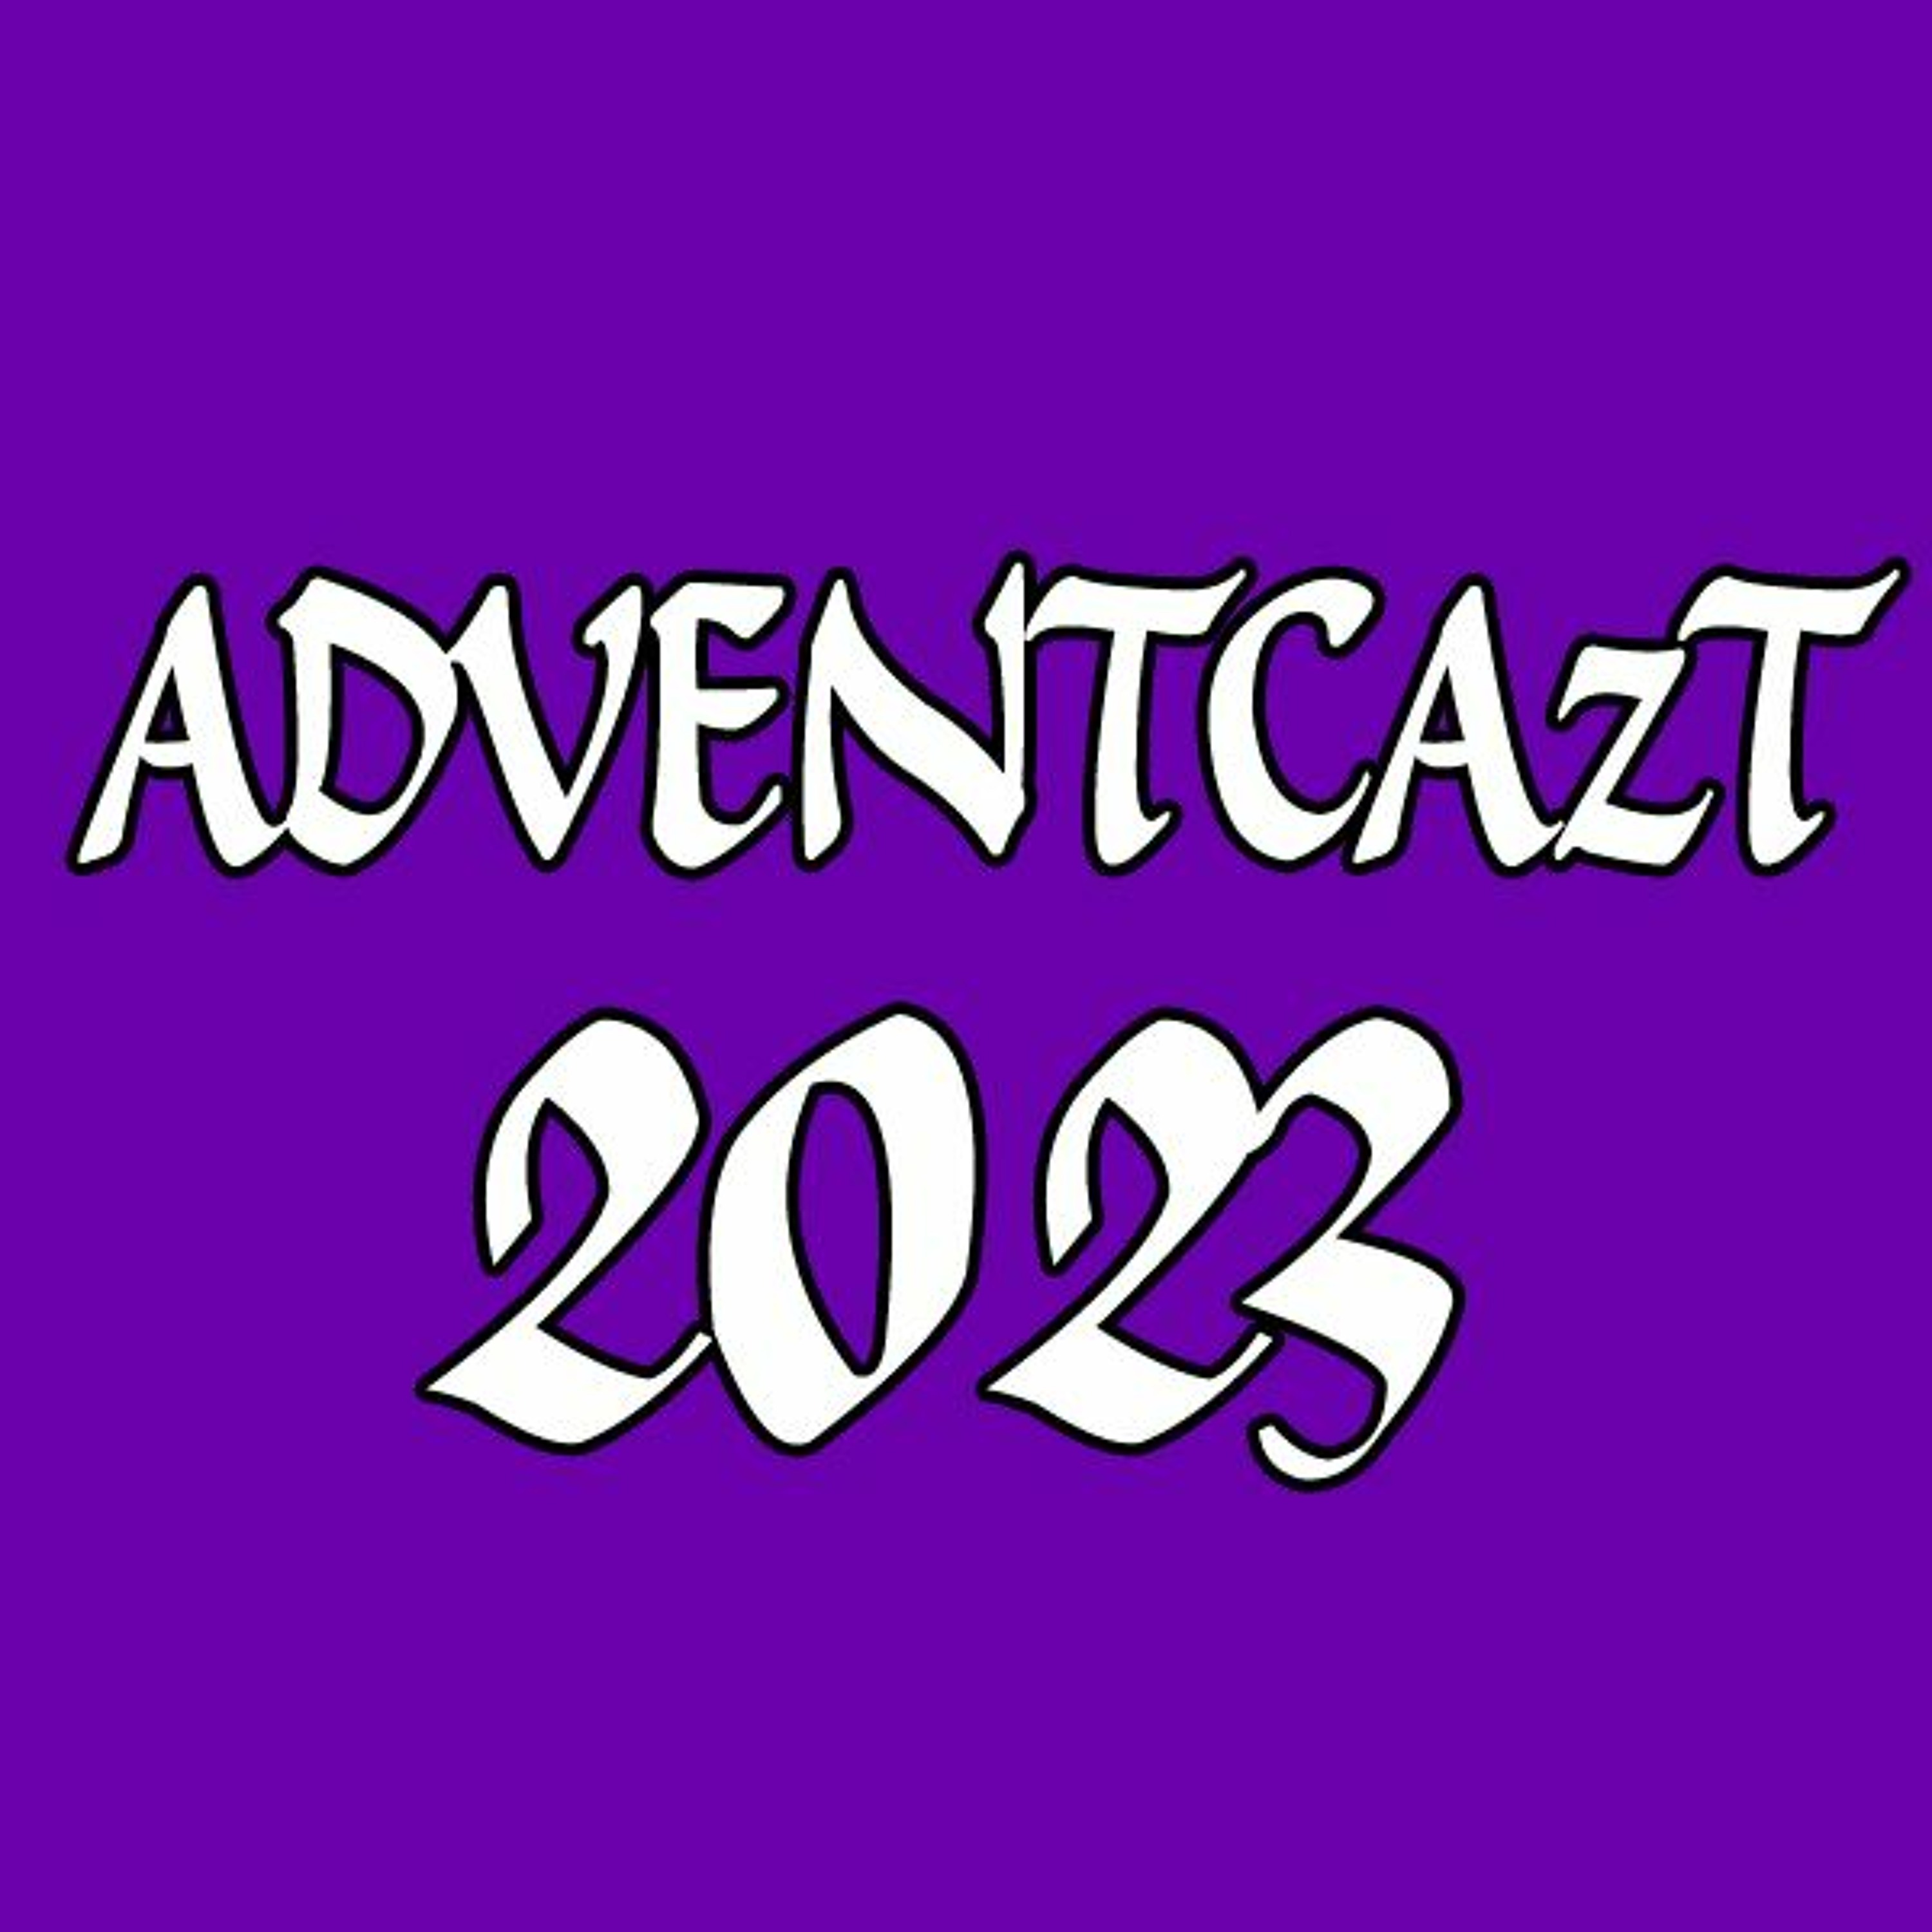 ADVENTCAzT 2023 – 12 – Thursday 2nd Week of Advent: Good intentions